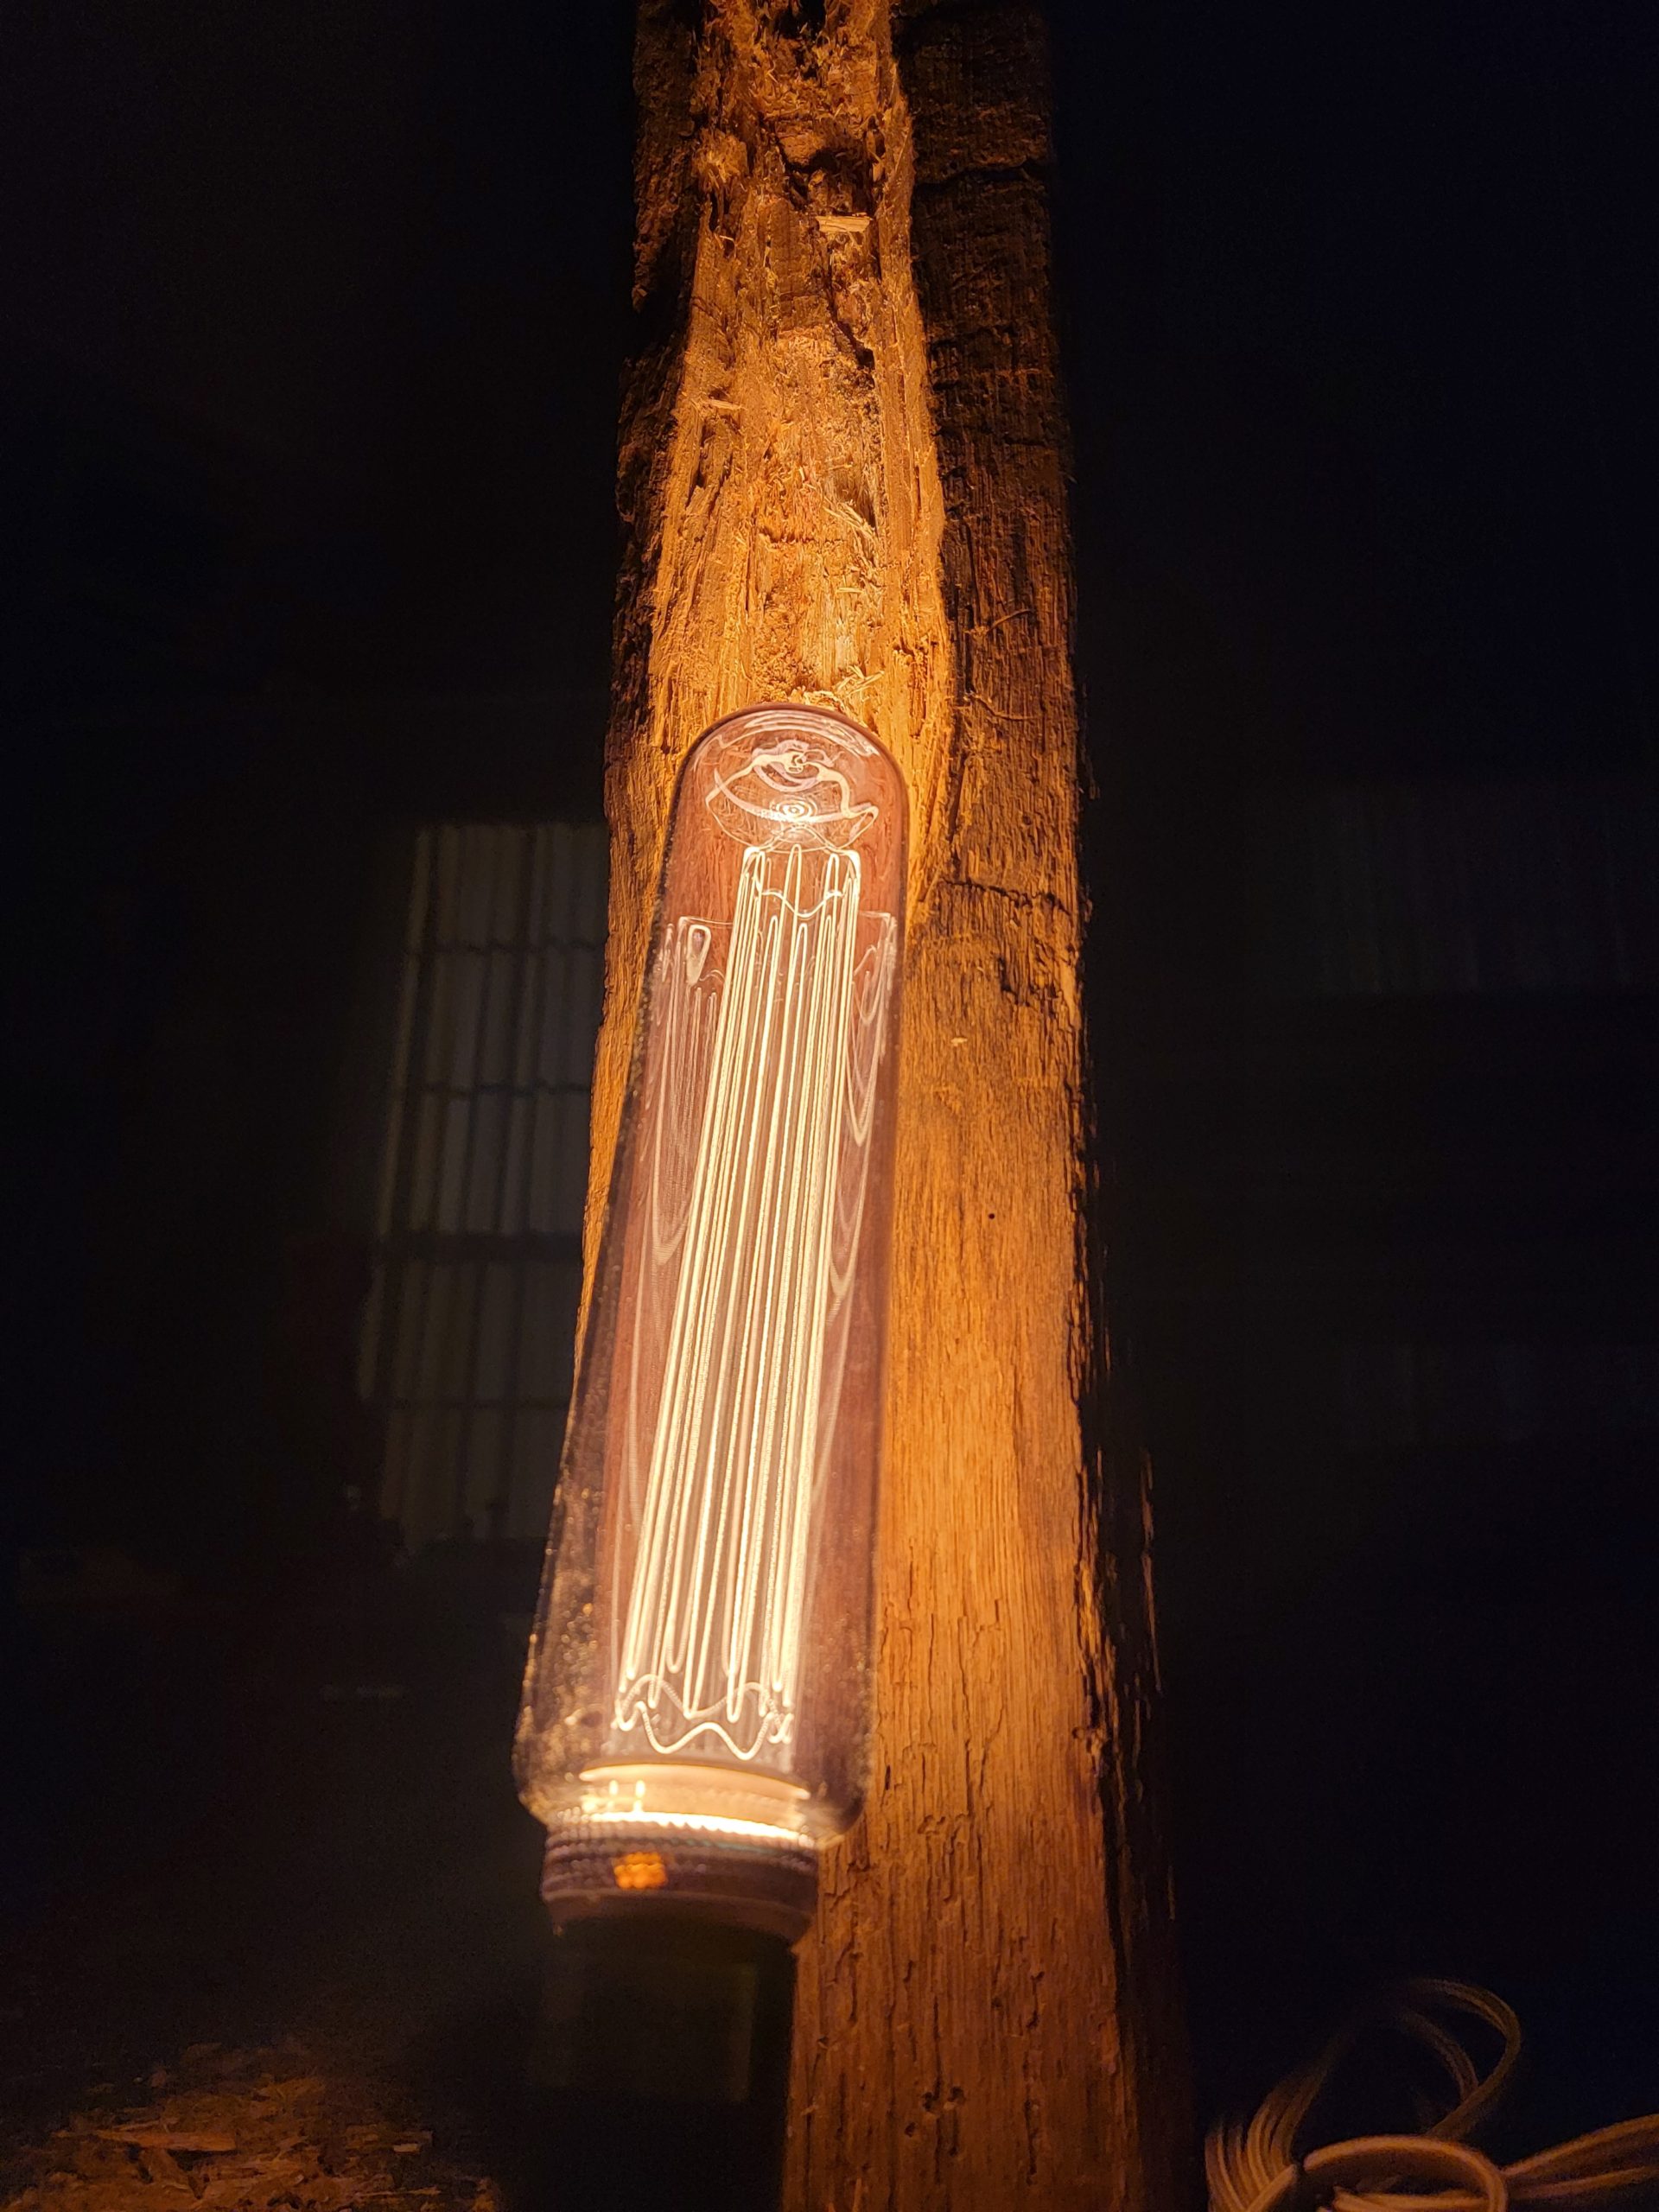 Edison bulb and barn beam, rustic lighting, ambient light